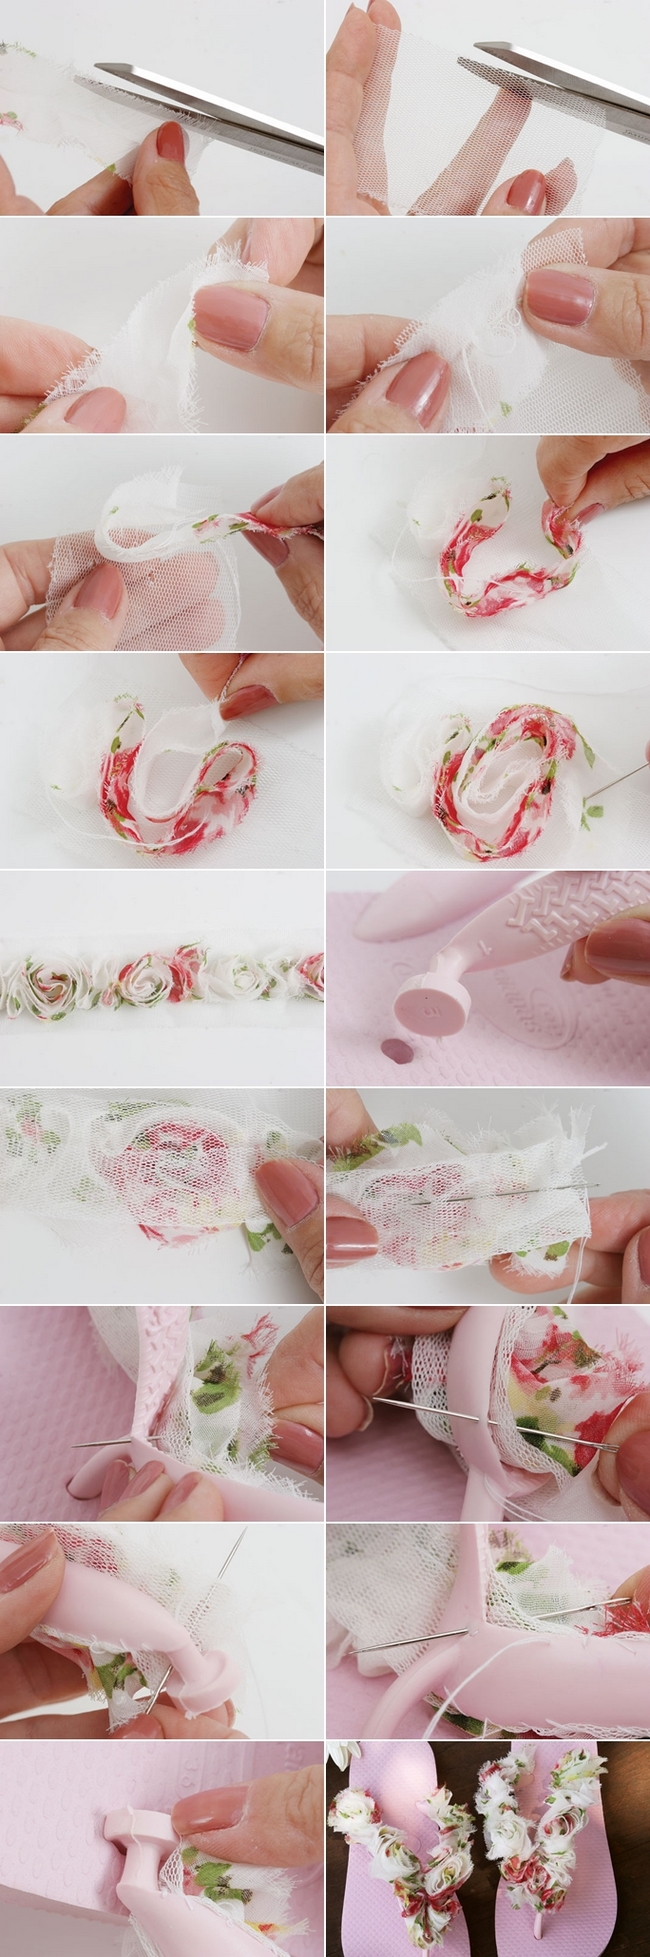 diy flip flops tutorial light pink fabric scraps floral pattern